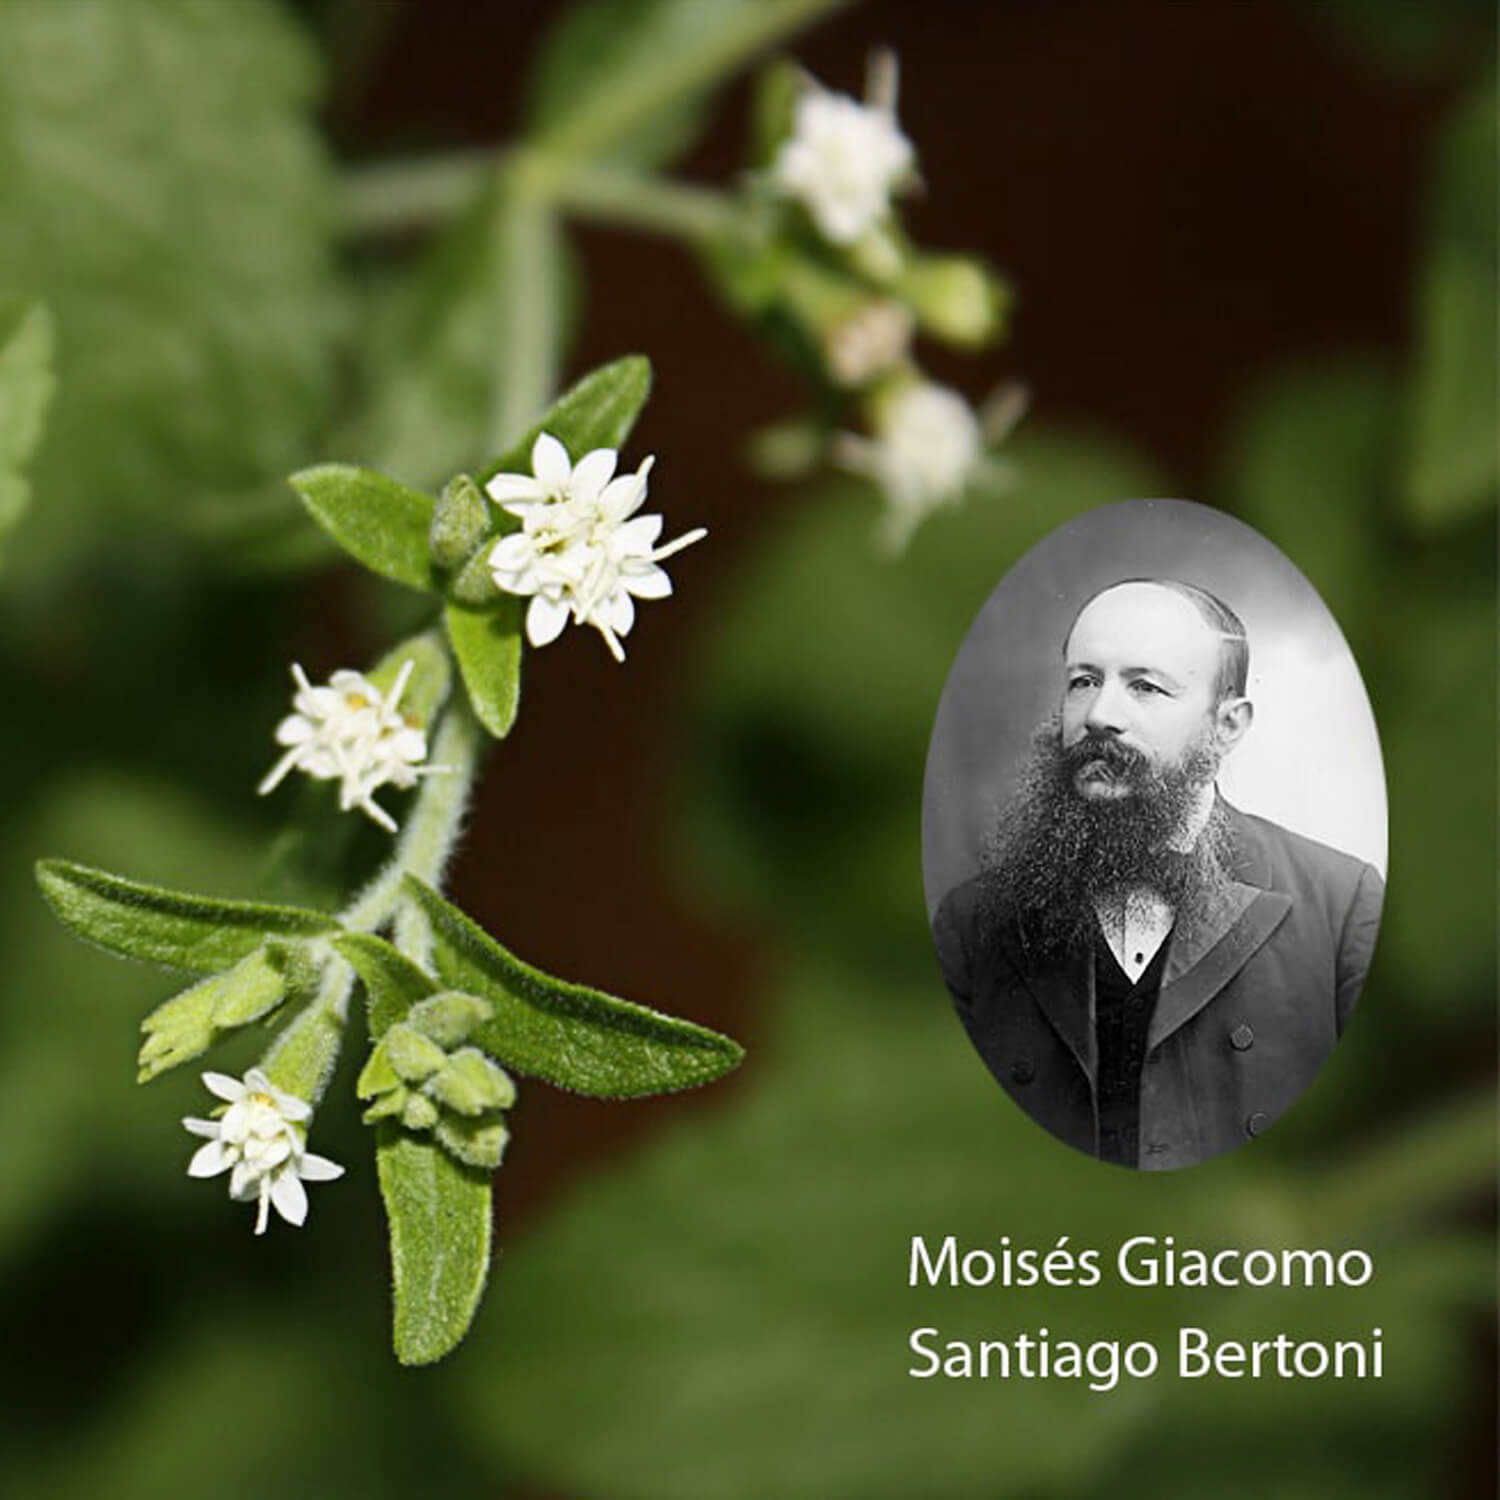 Der Botaniker Moises Bertoni ist Entdecker der Stevia Pflanze Stevia rebaudiana steviapura